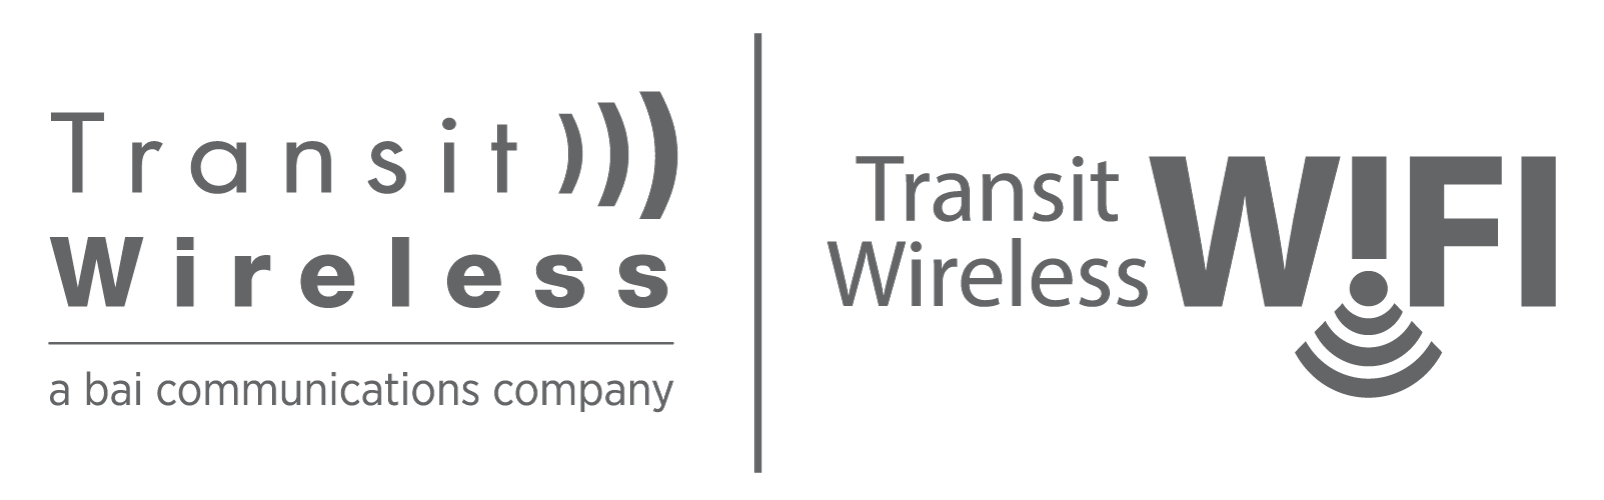 Transit Wireless logo.